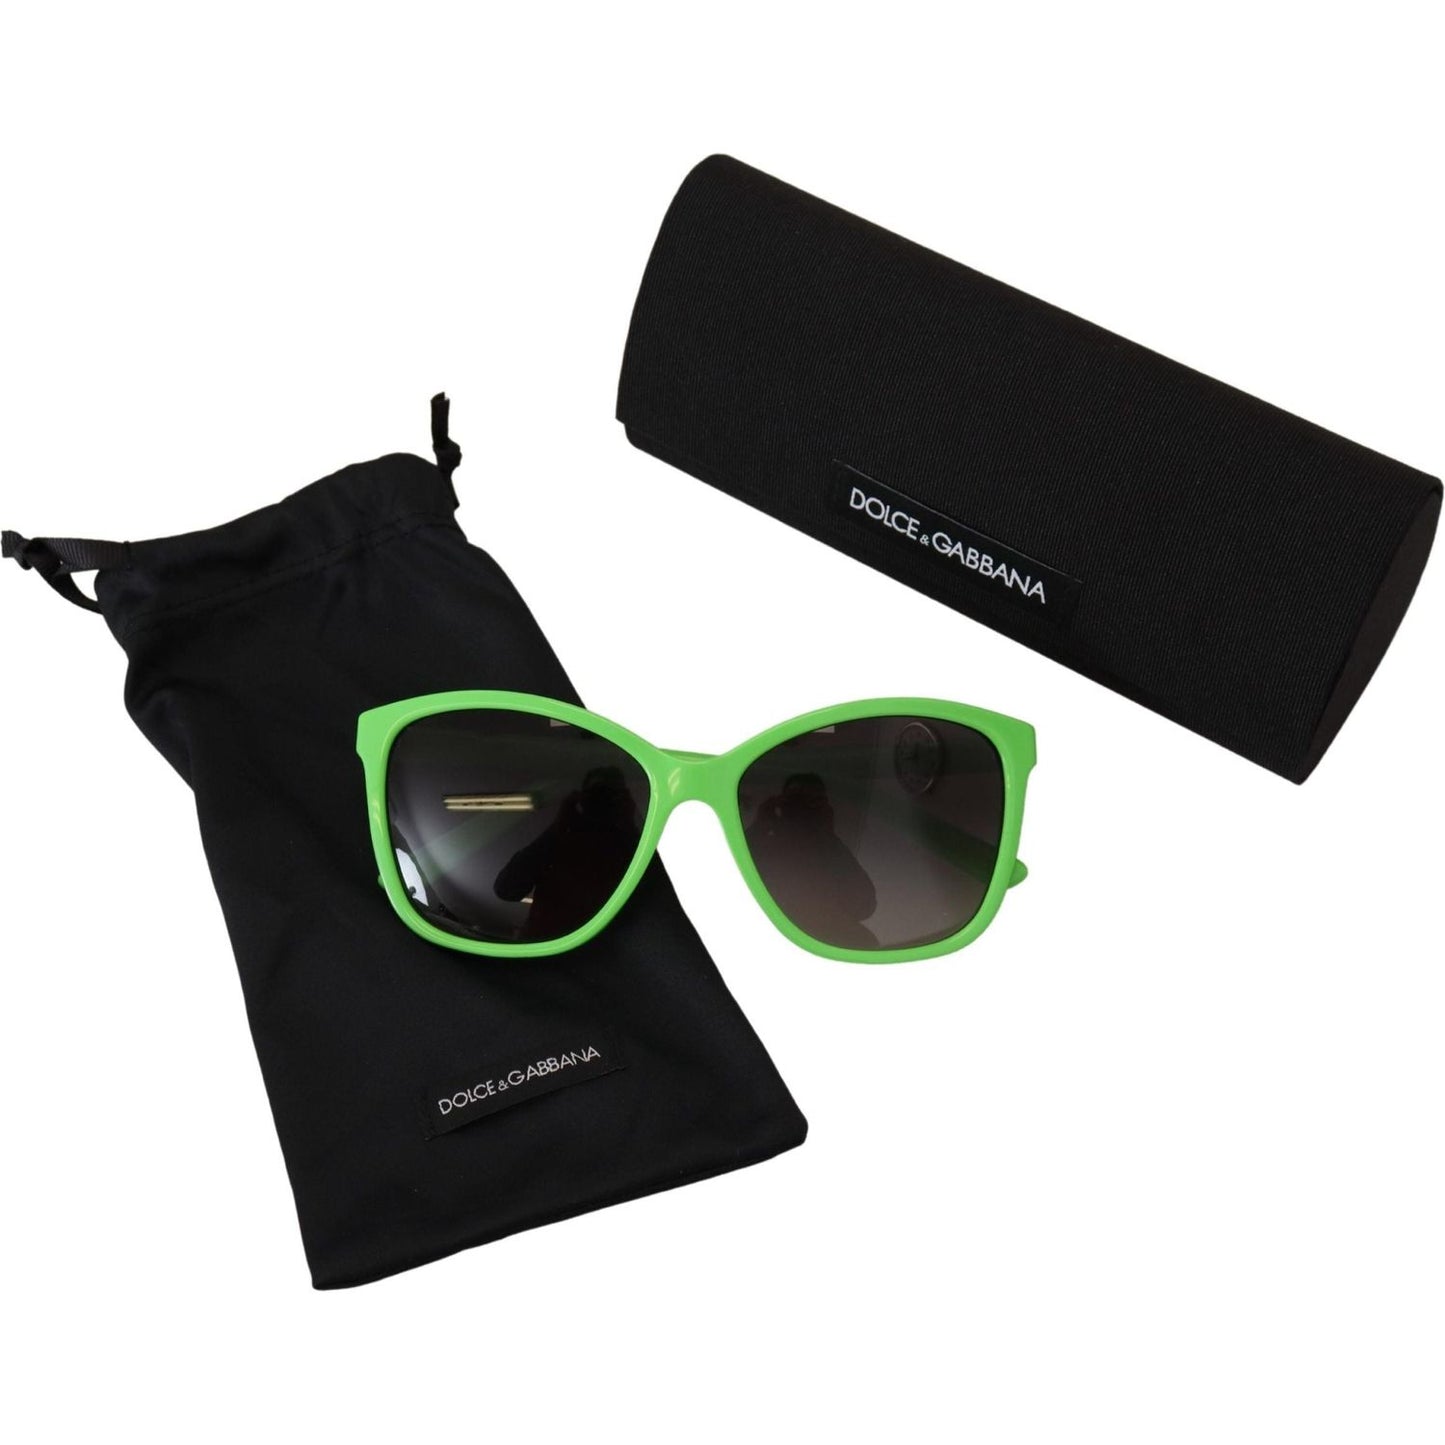 Dolce & Gabbana Chic Green Acetate Round Sunglasses green-acetate-frame-round-shades-dg4170pm-sunglasses IMG_3470-scaled-1e738830-985.jpg